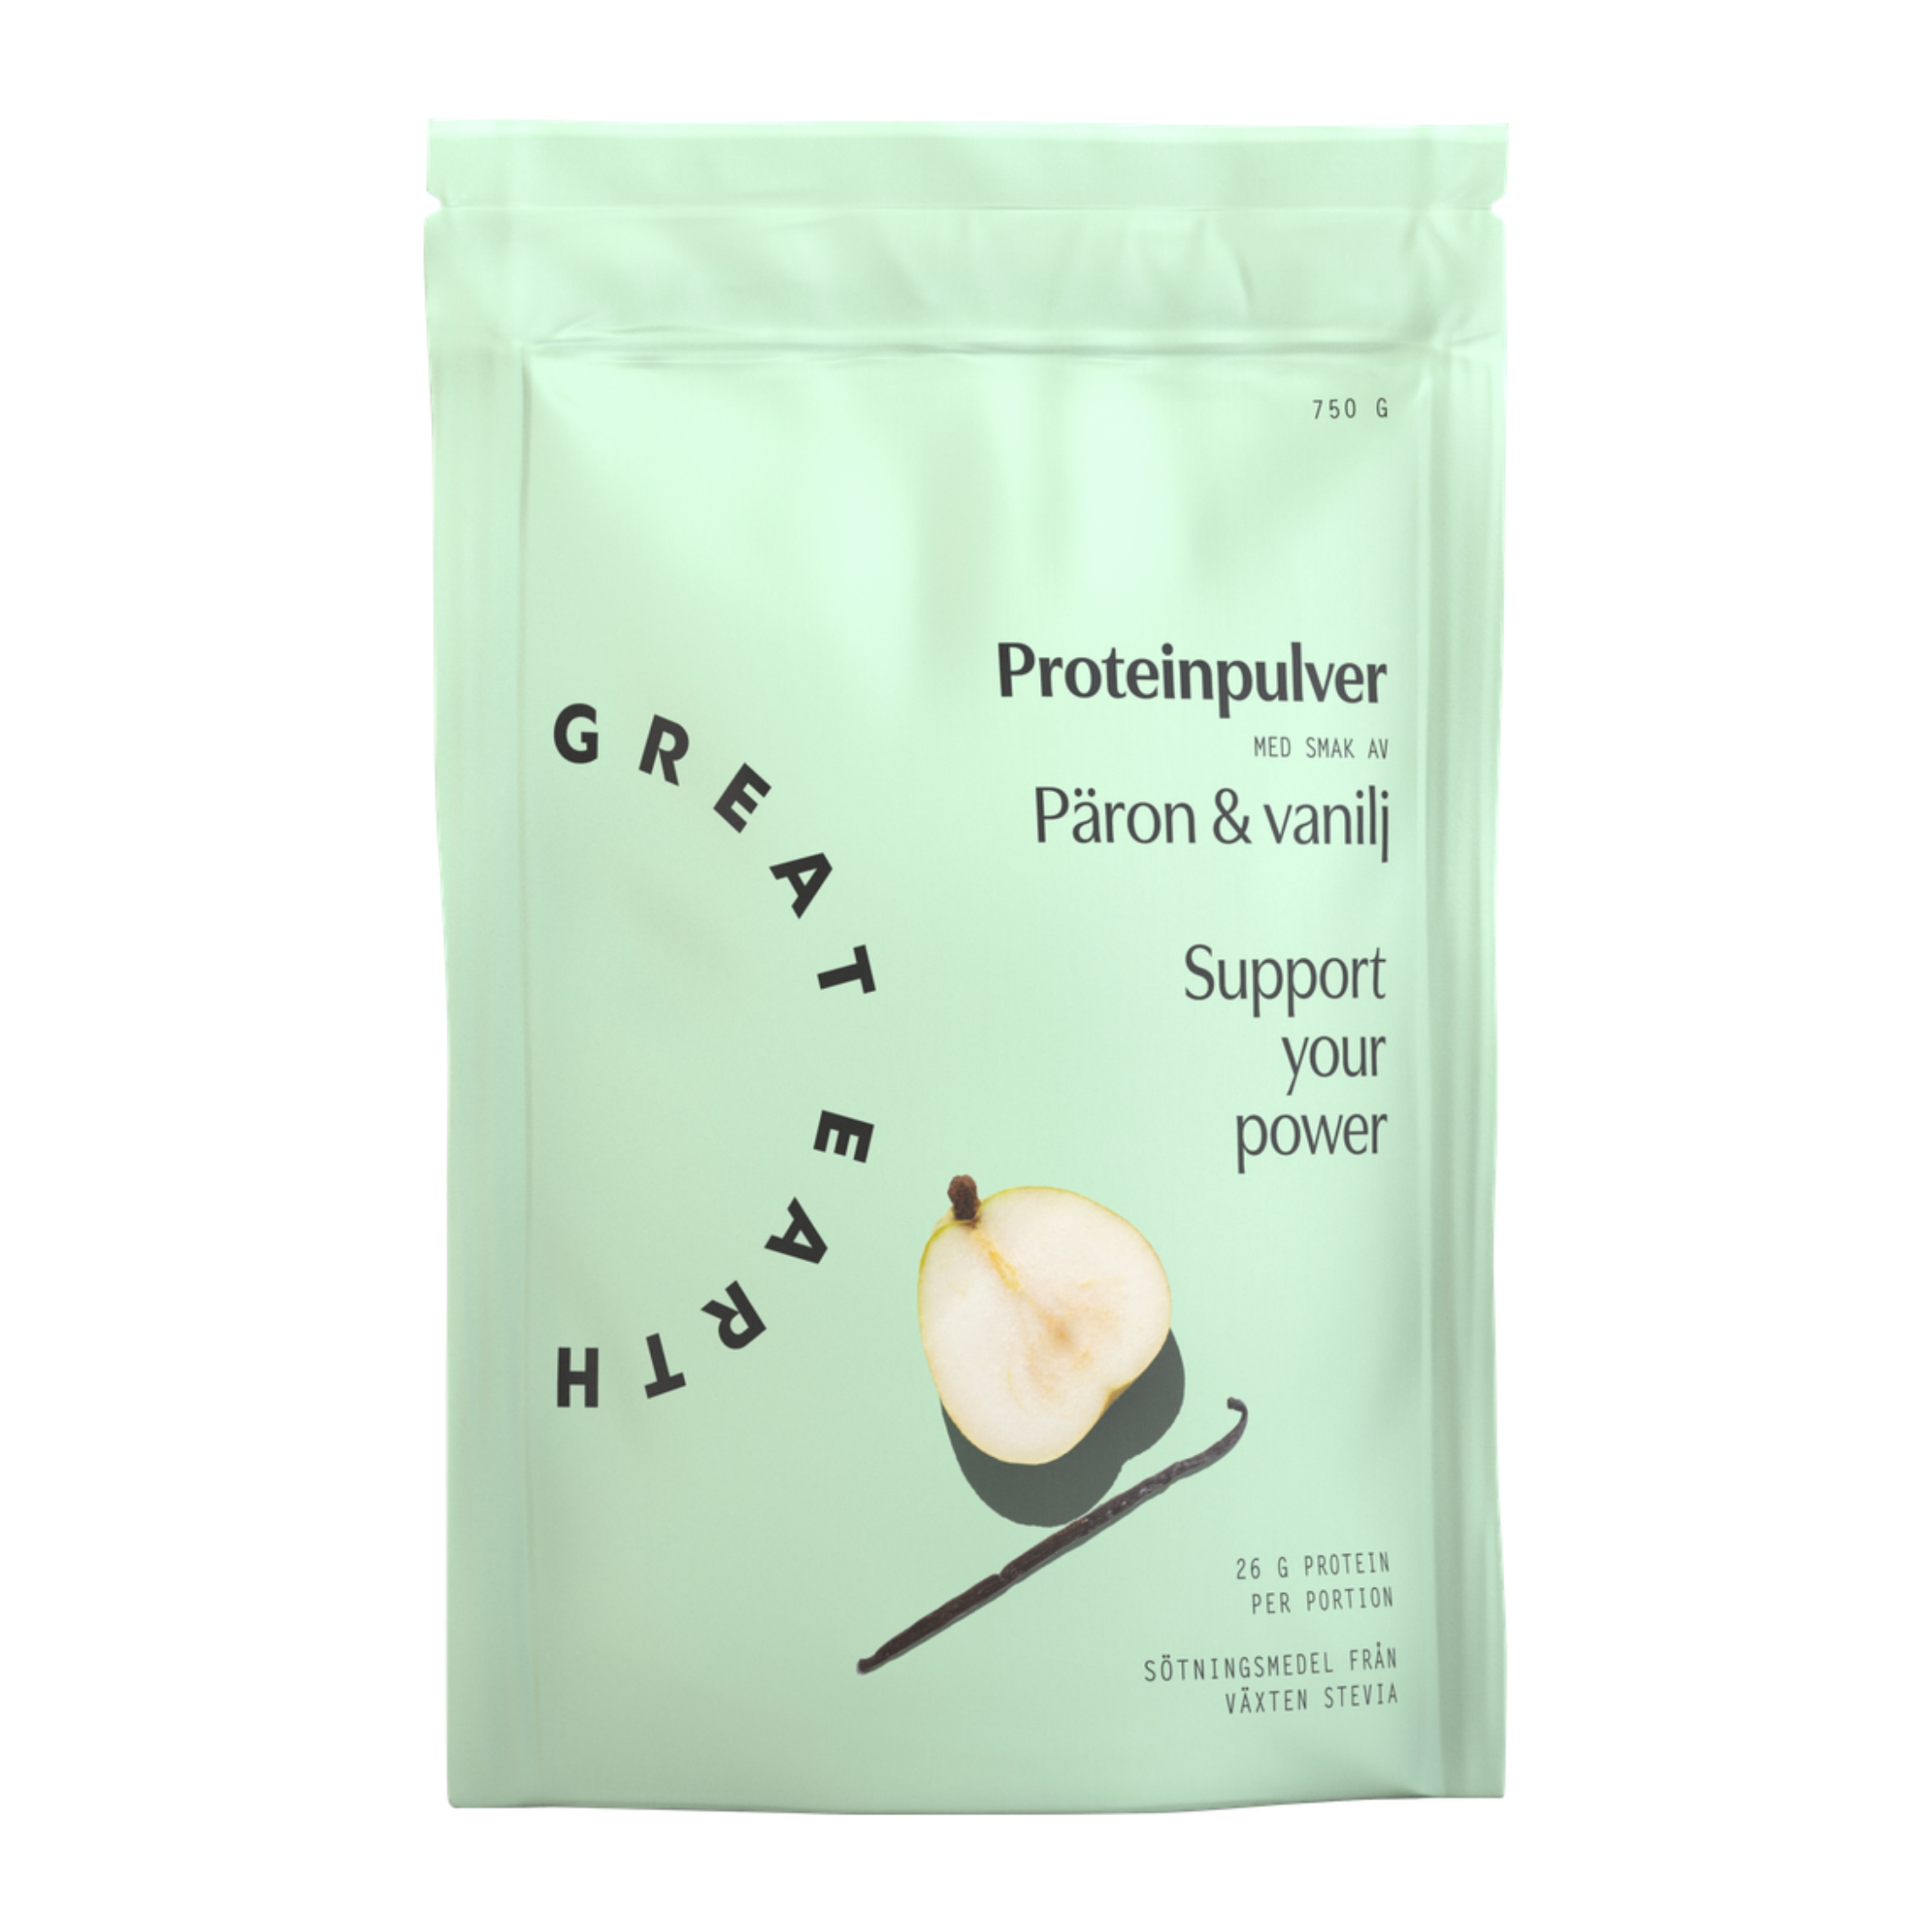 Proteinpulver Päron/Vanilj 750g